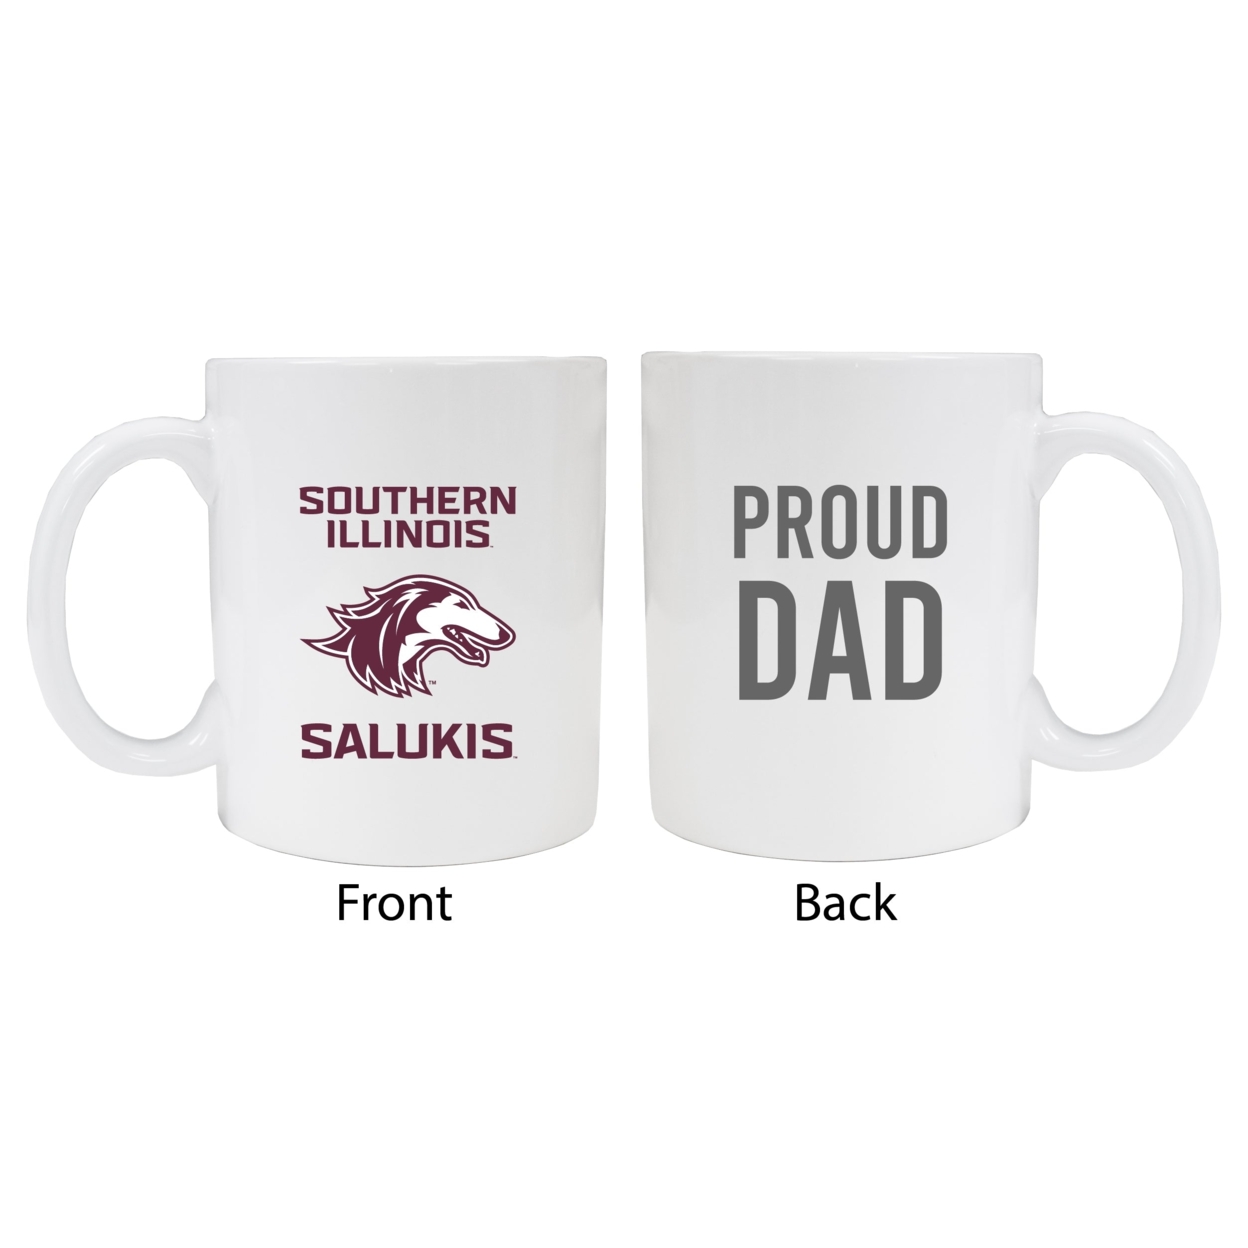 Southern Illinois Salukis Proud Dad Ceramic Coffee Mug - White (2 Pack)